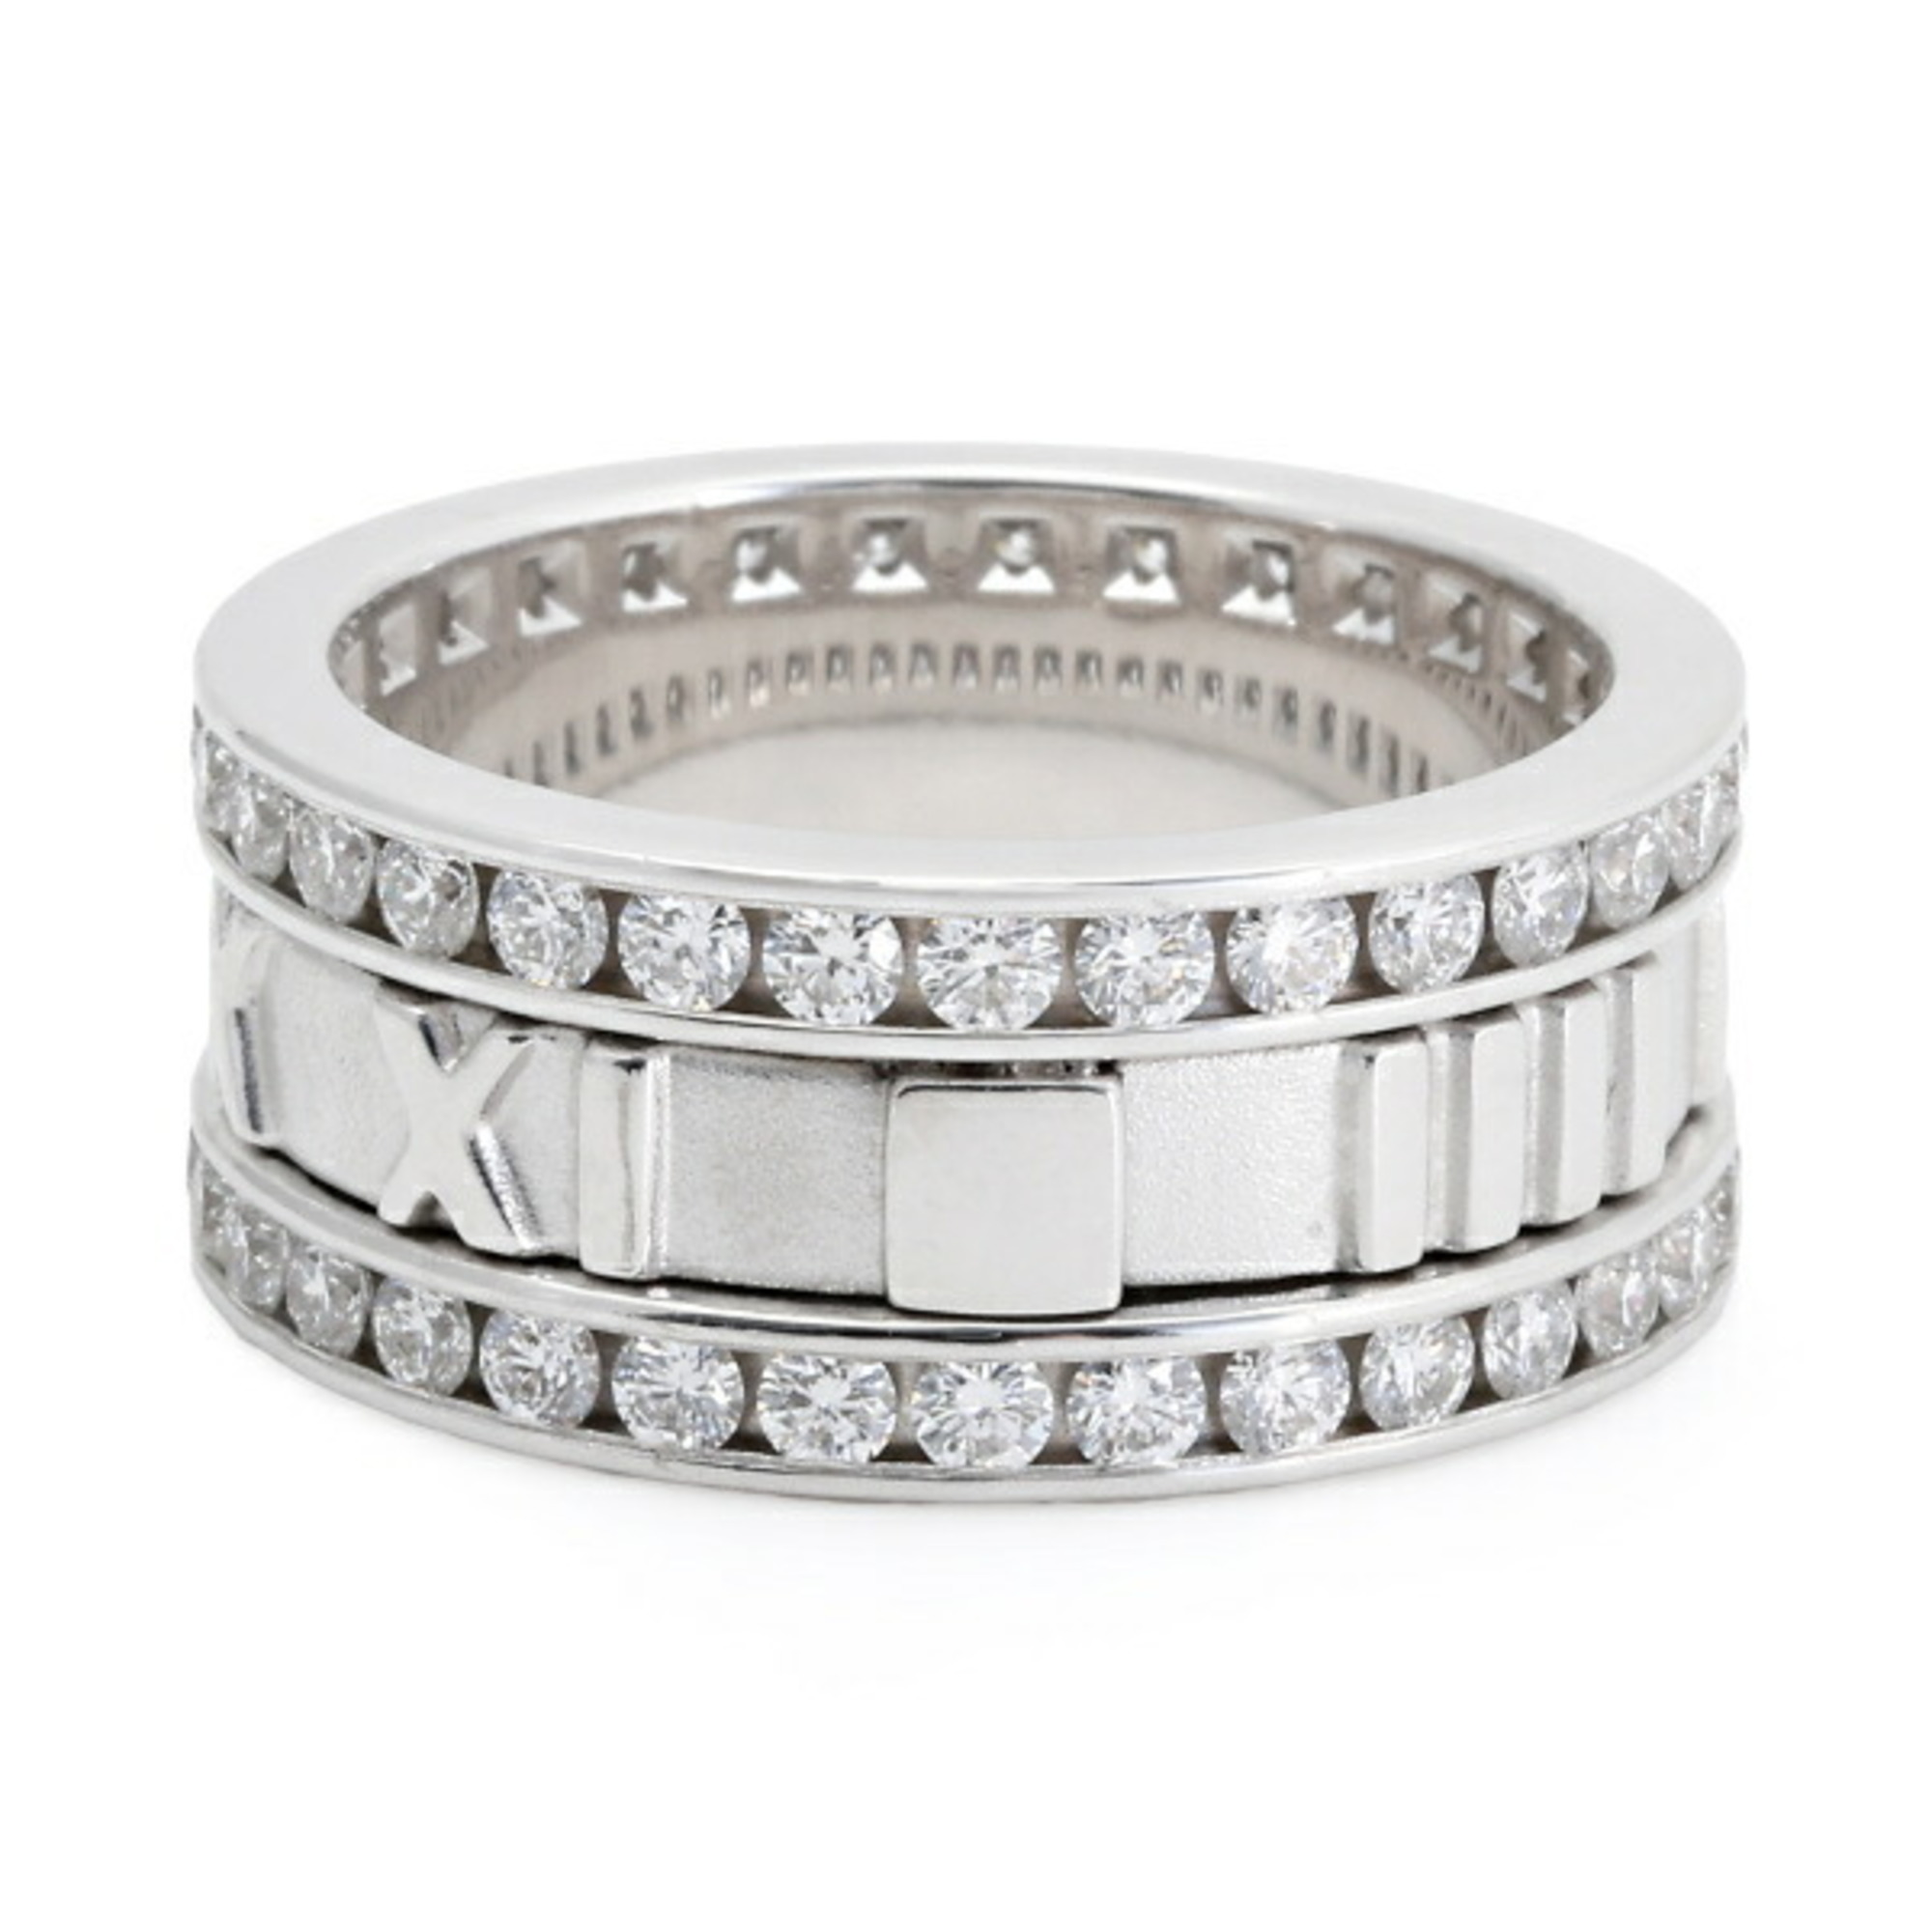 Tiffany Atlas K18WG white gold ring